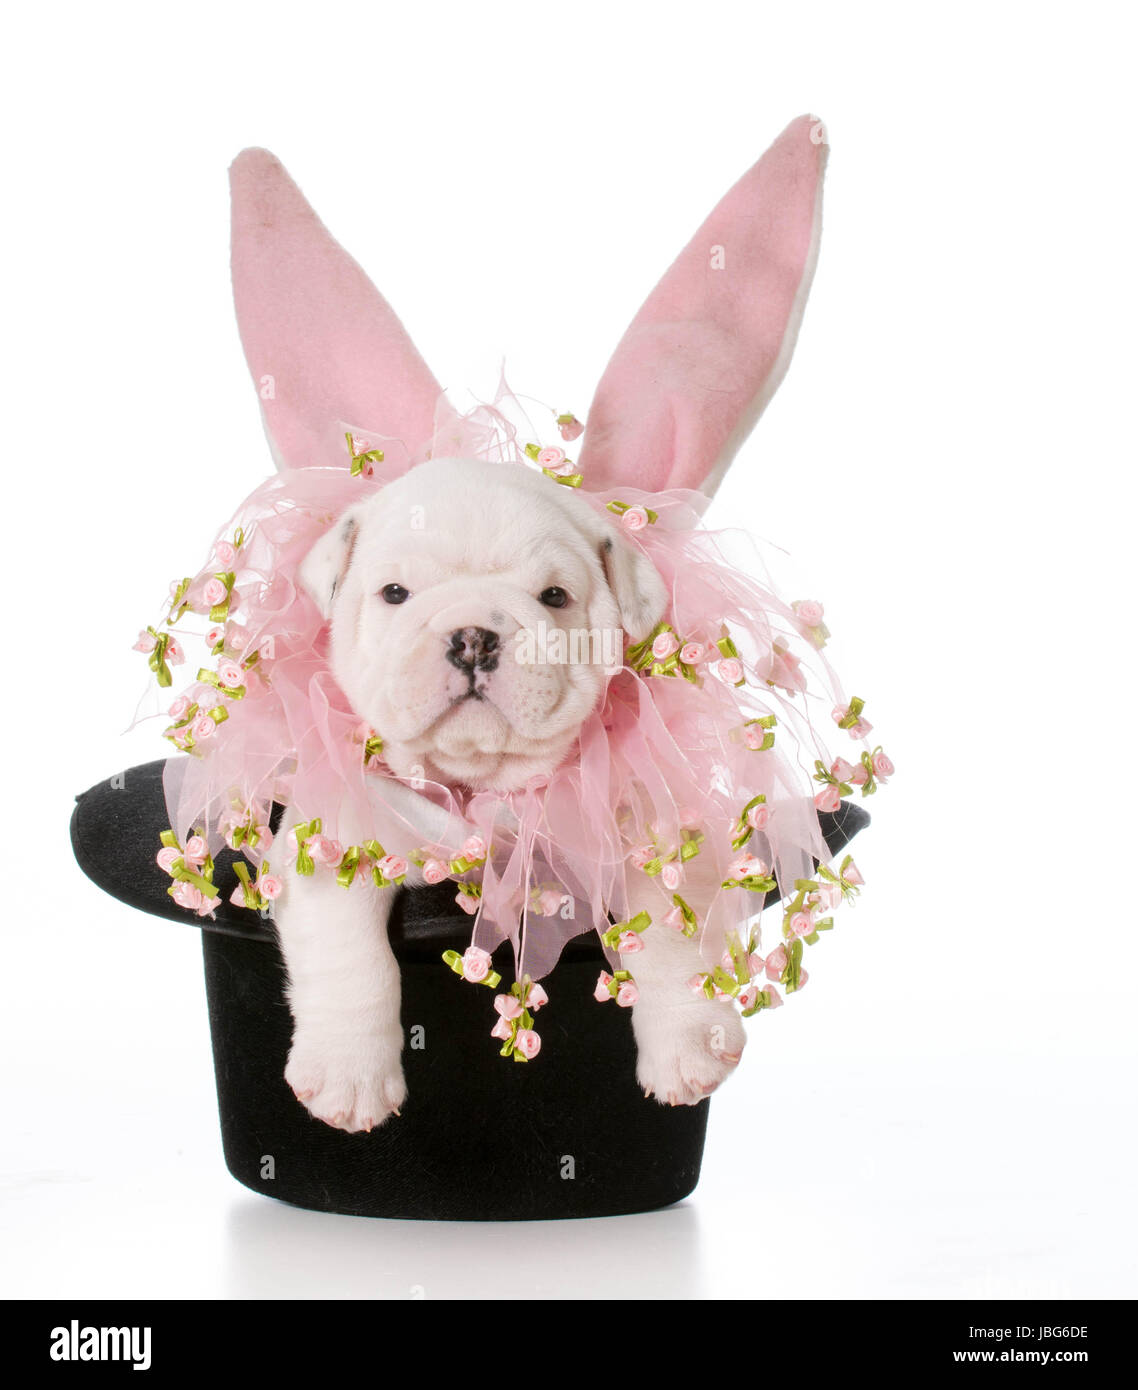 dog wearing bunny ears inside a black top hat Stock Photo